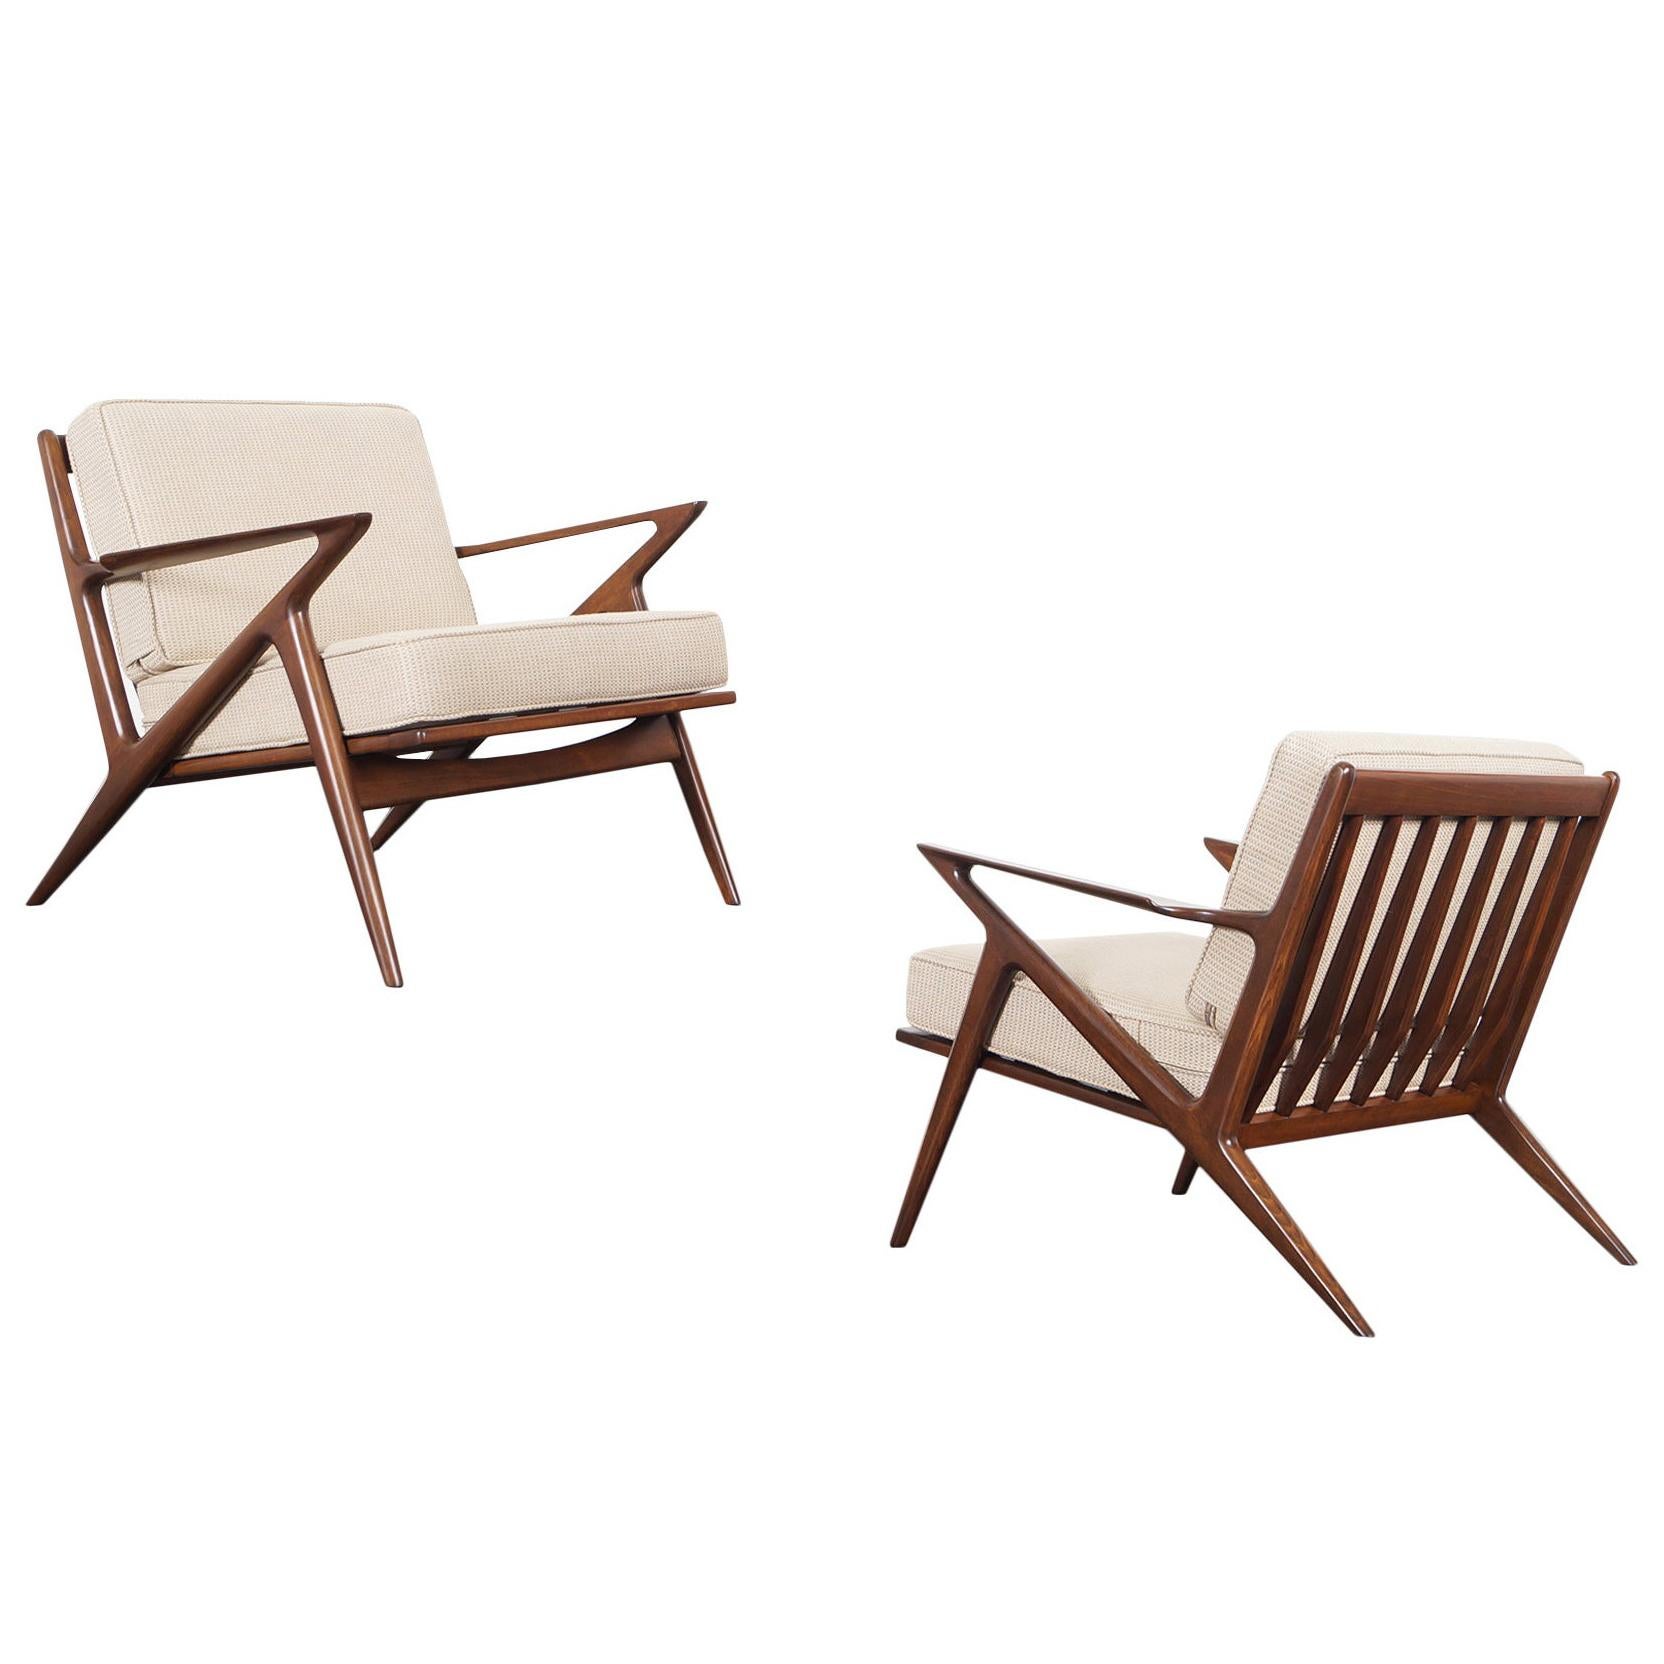 Danish Modern "Z" Lounge Chairs by Poul Jensen for Selig